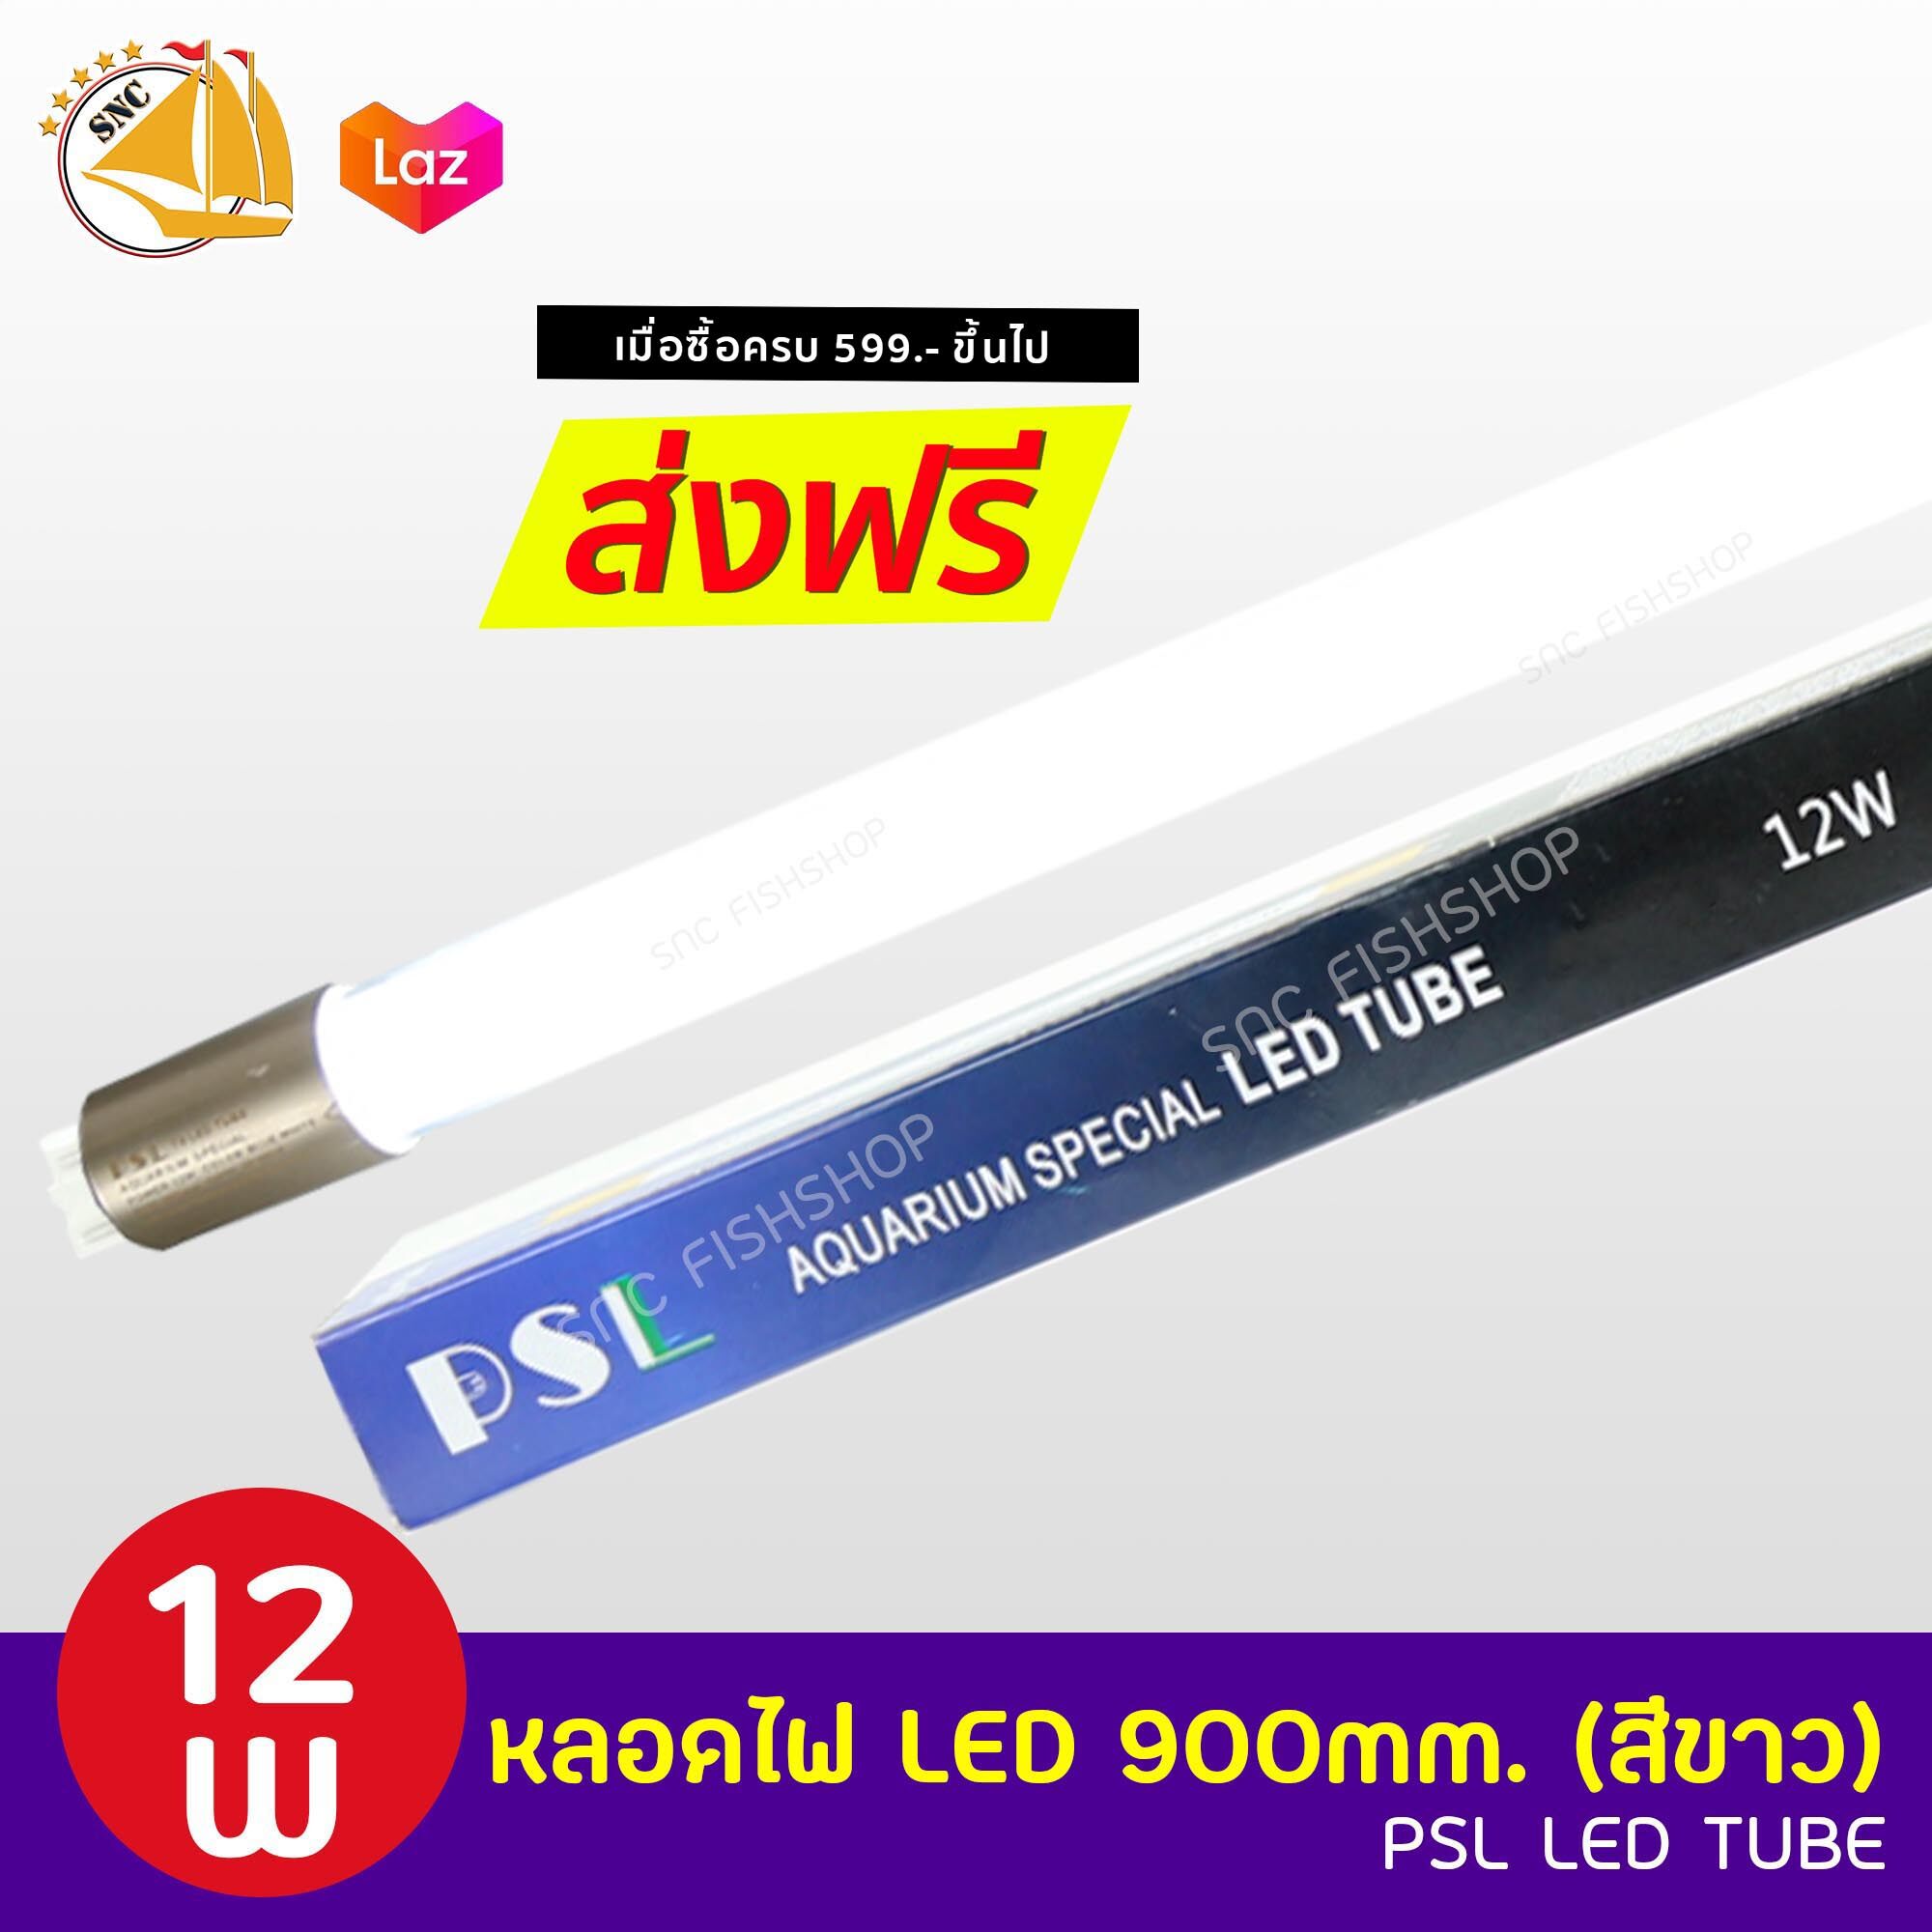 PSL LED TUBE หลอดไฟ LED 900mm. สีขาว ใช้กับราง 48 นิ้ว 12W